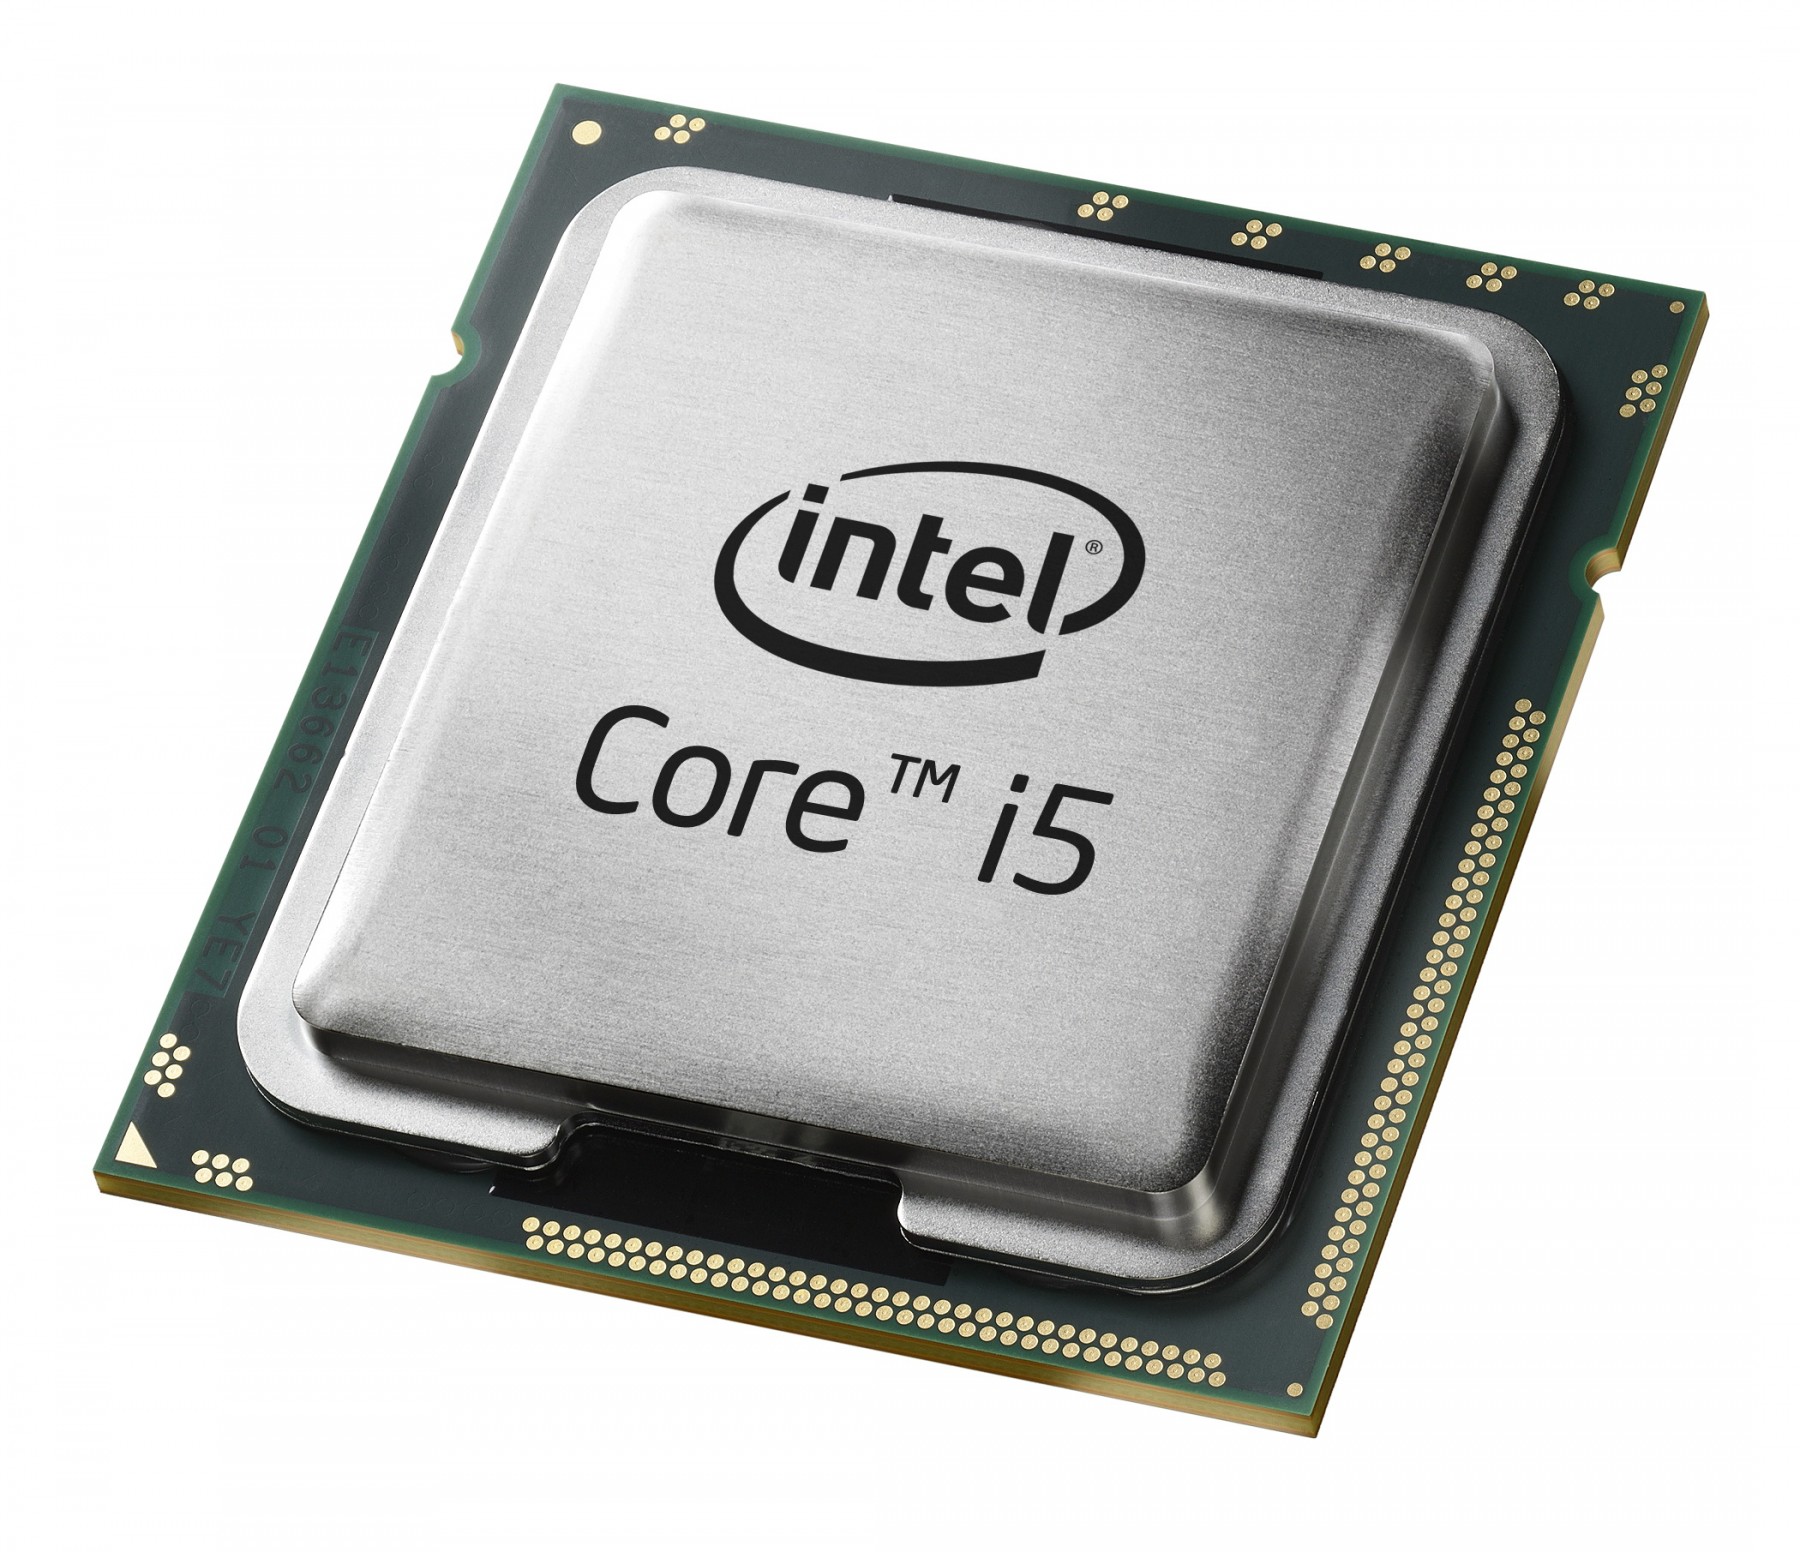 500030101-Intel Core i5-520M SLBNB 2.4Ghz 2.5GT/s Socket G1 Processor-image